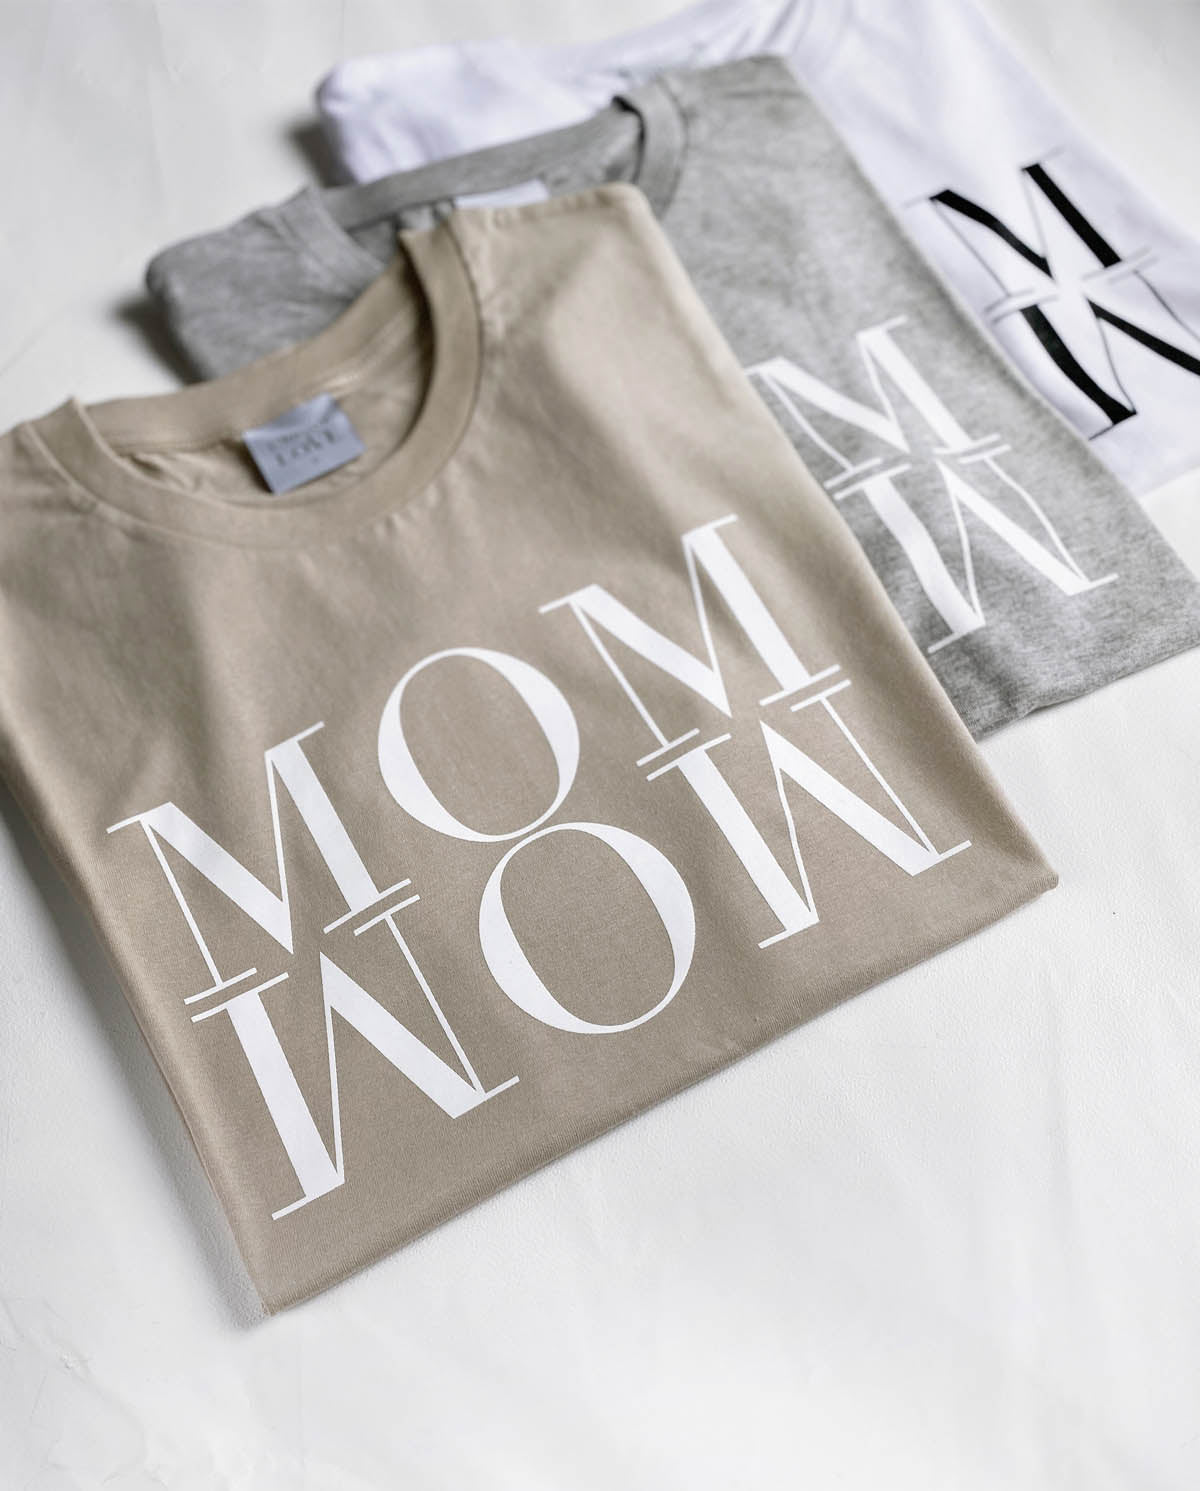 Unique Love MOM WOW T-Shirt